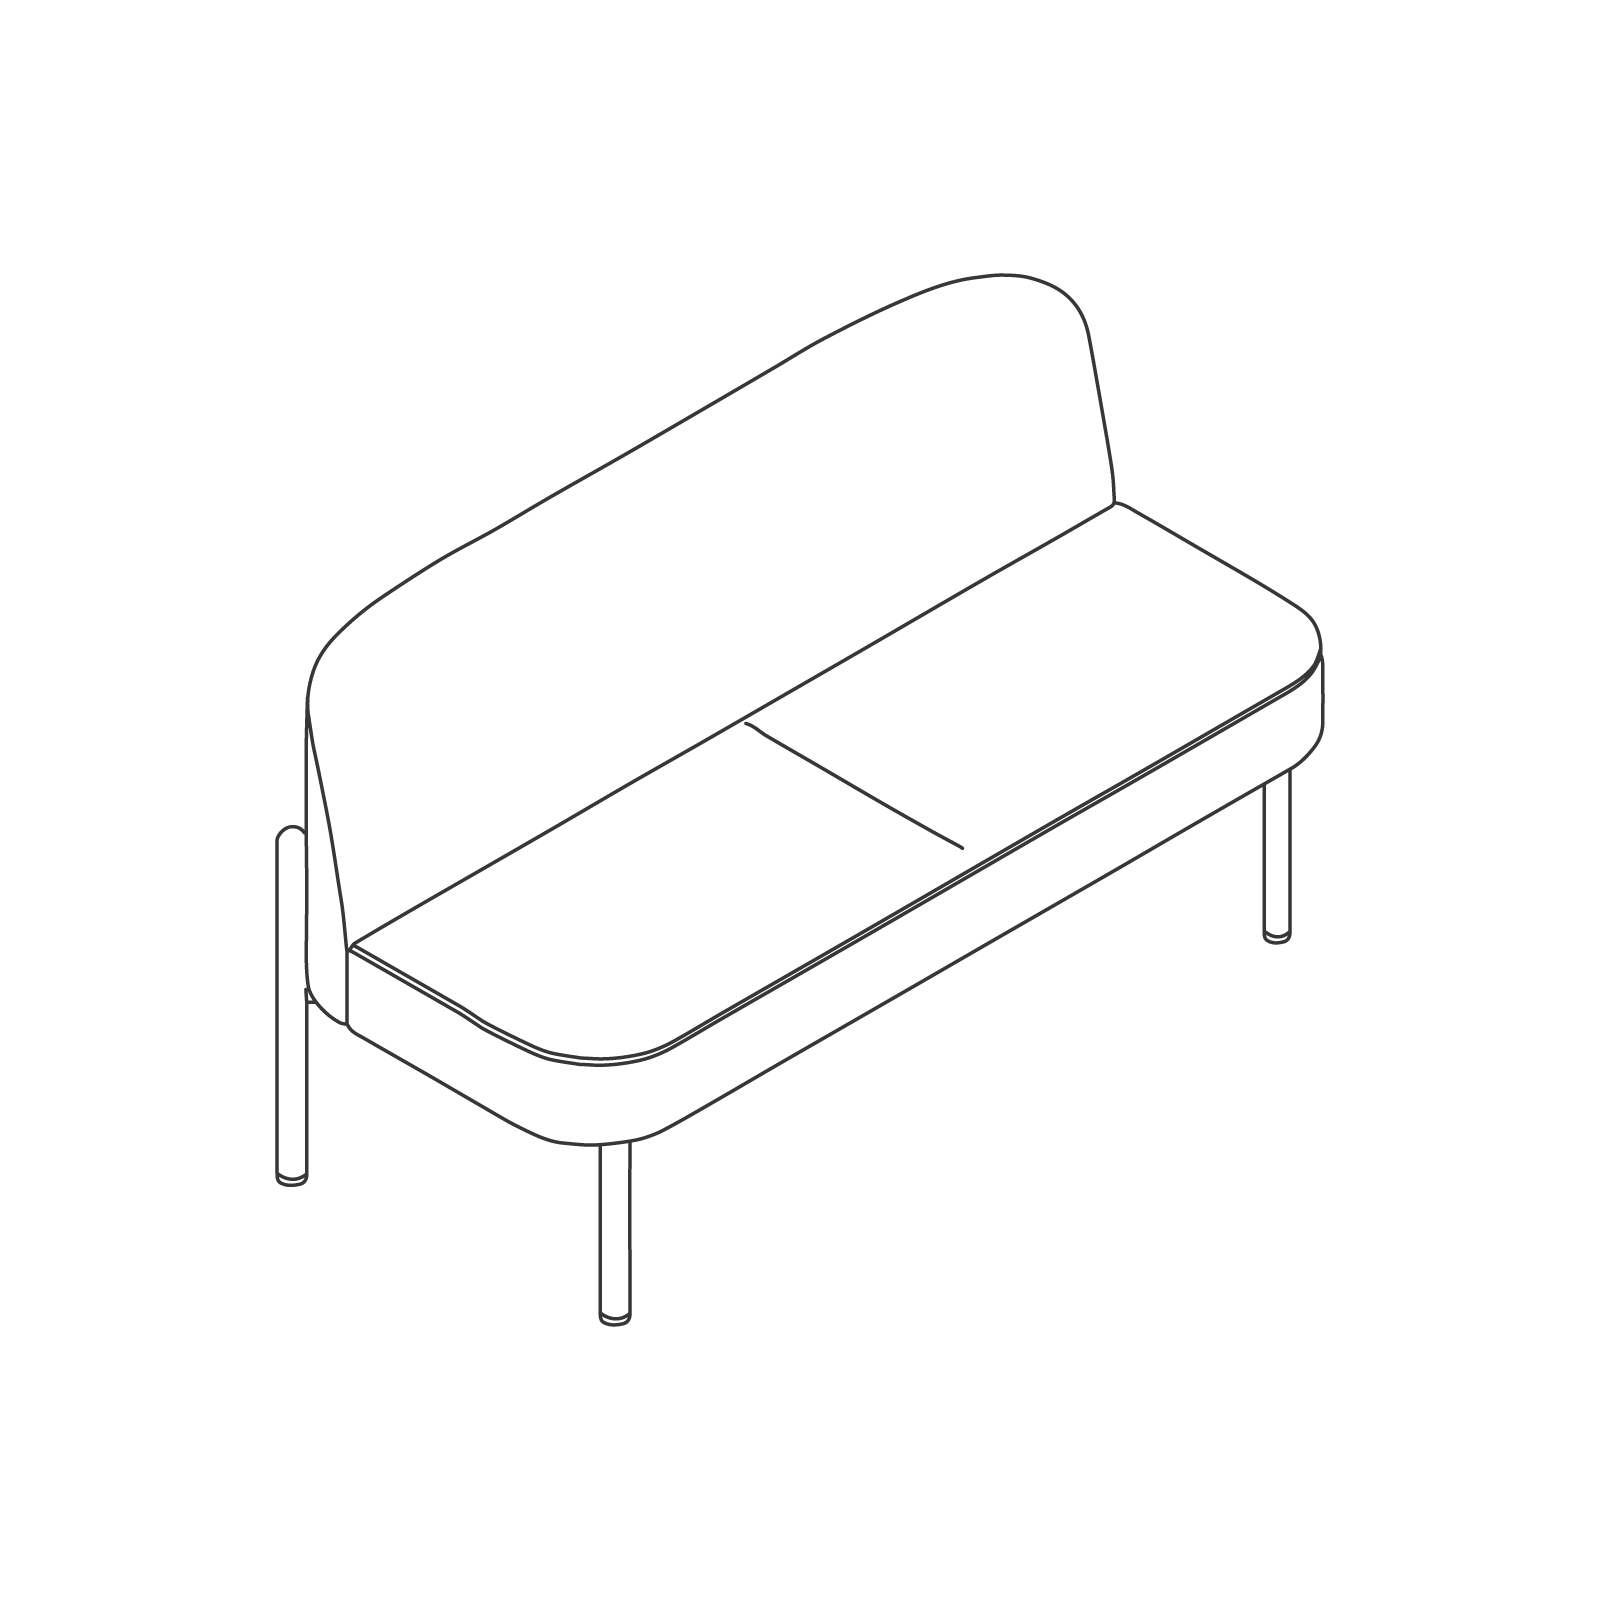 A line drawing - Hue Sofa